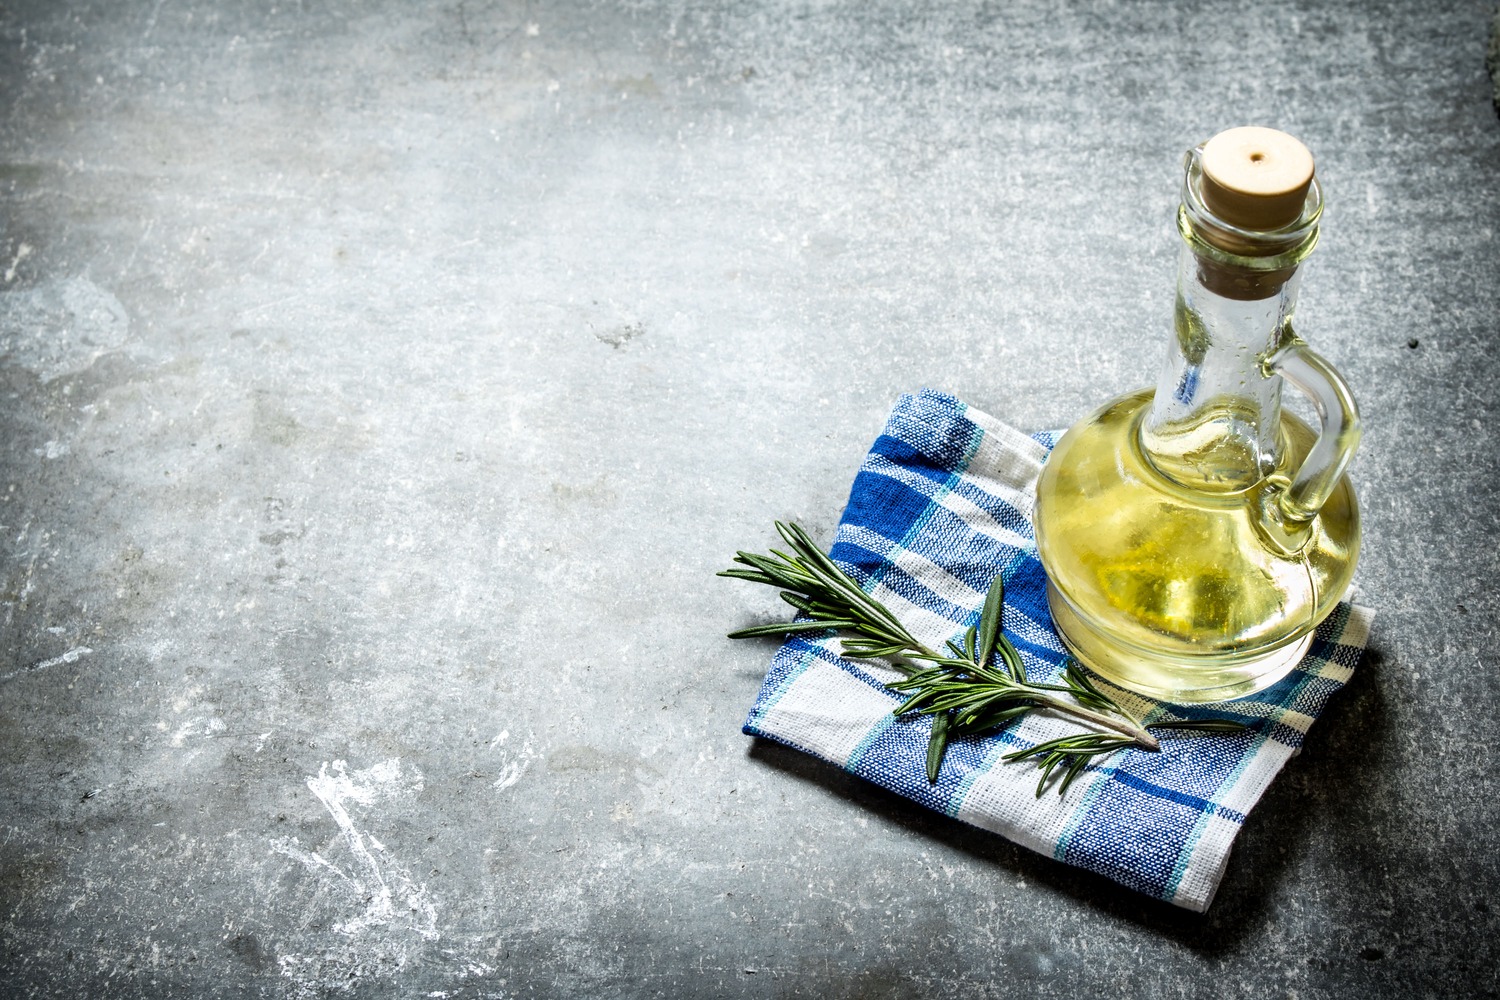 olive-oil-with-rosemary-branch-2021-09-03-09-36-08-utc-1.jpg